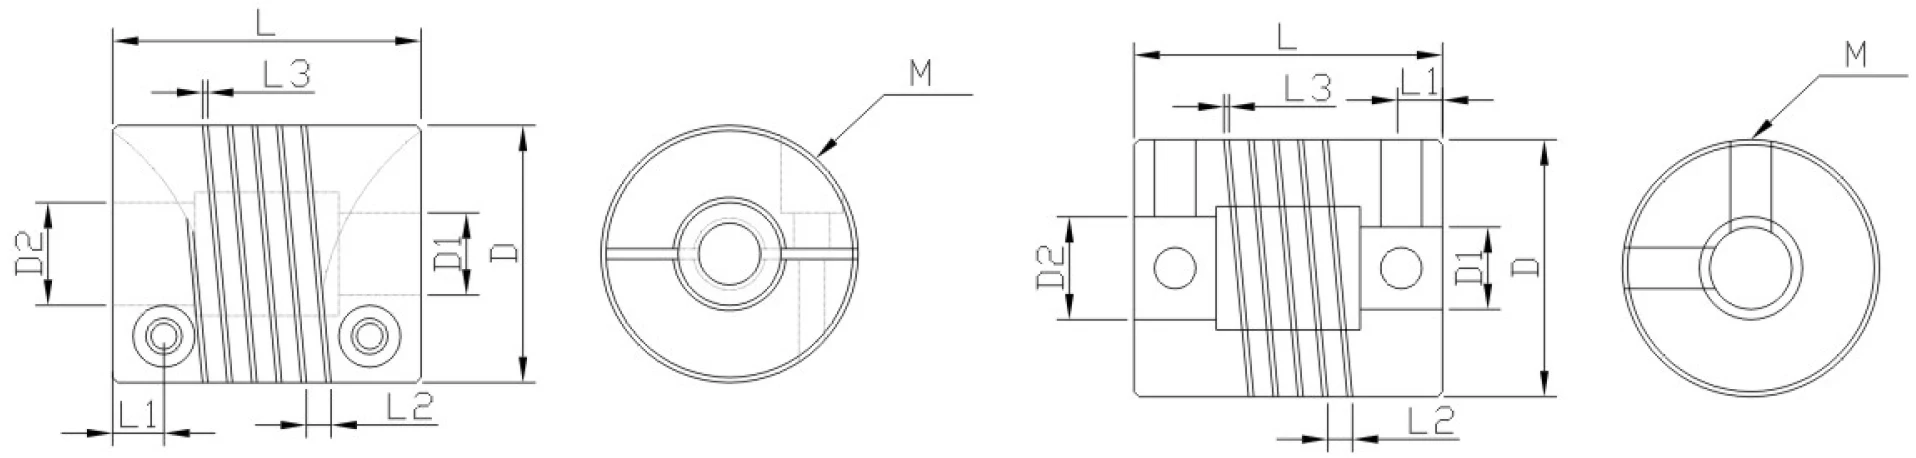 LR-B-D25L30 8mm diameter shaft encoder Hold type aluminum flexible coupling flange coupling